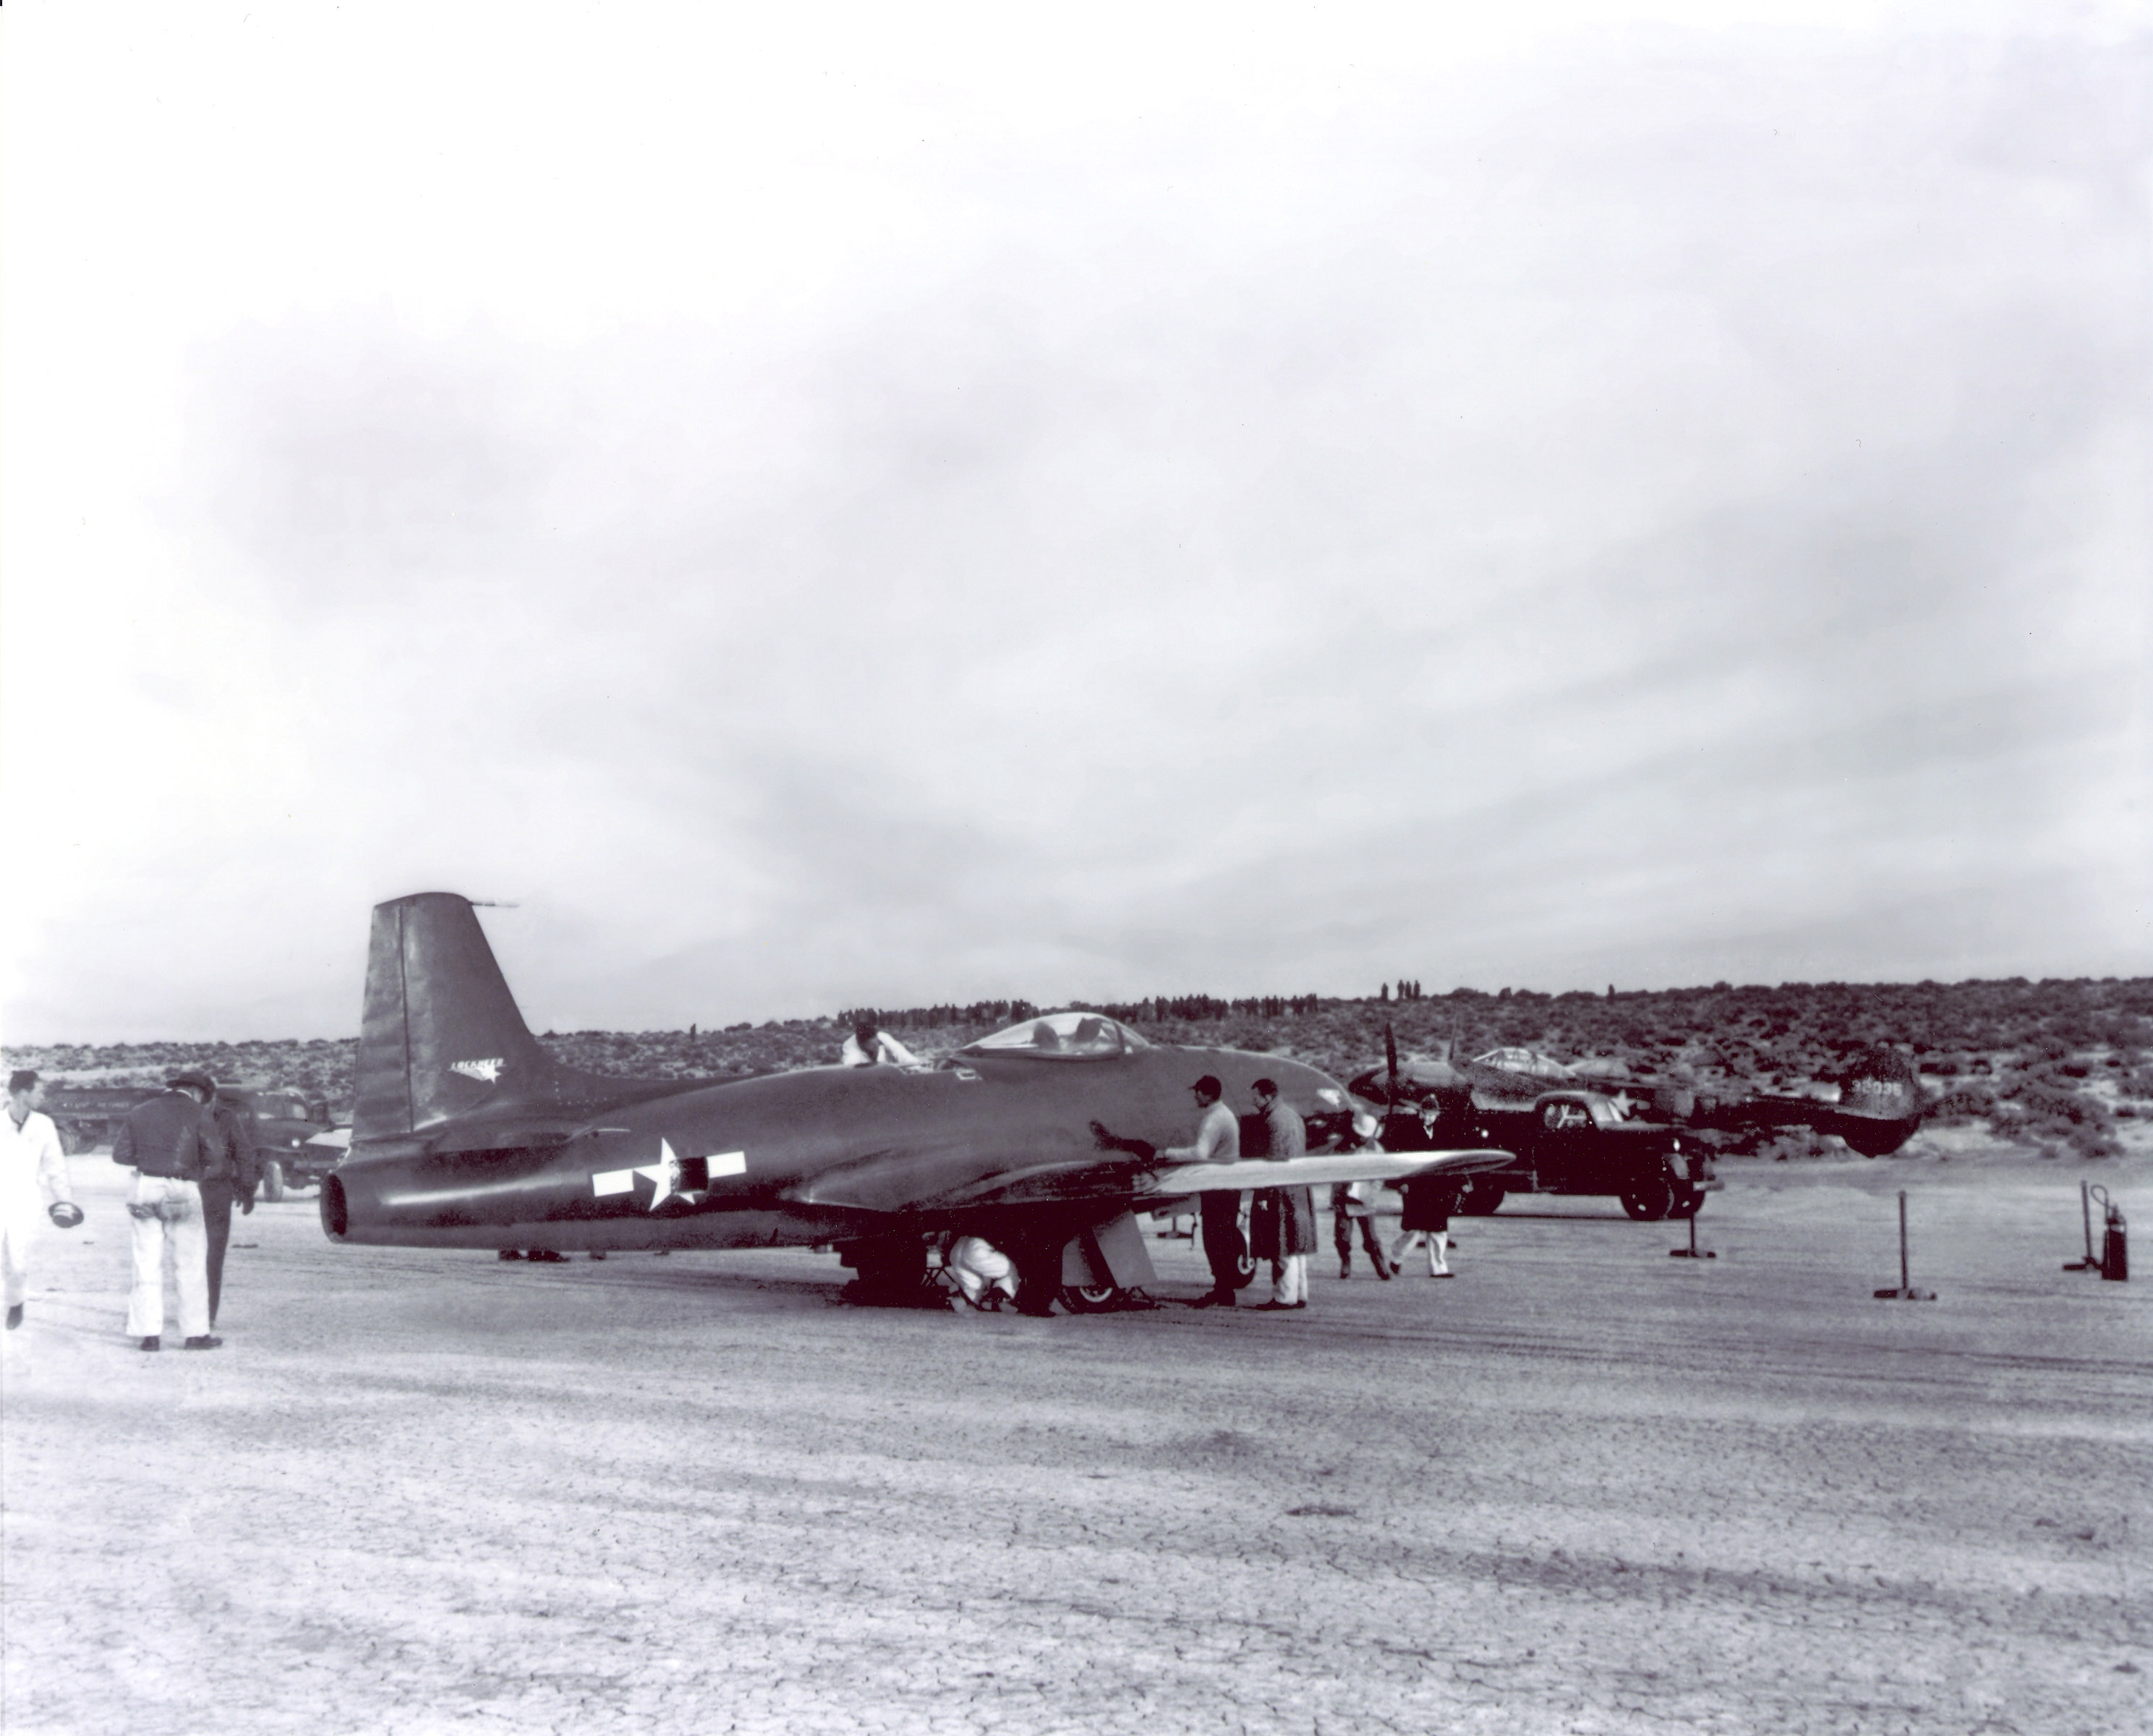 Lockheed XP-80 prototype, 44-83020, at Muroc AAF, 8 January 1944. (U.S. Air Force)